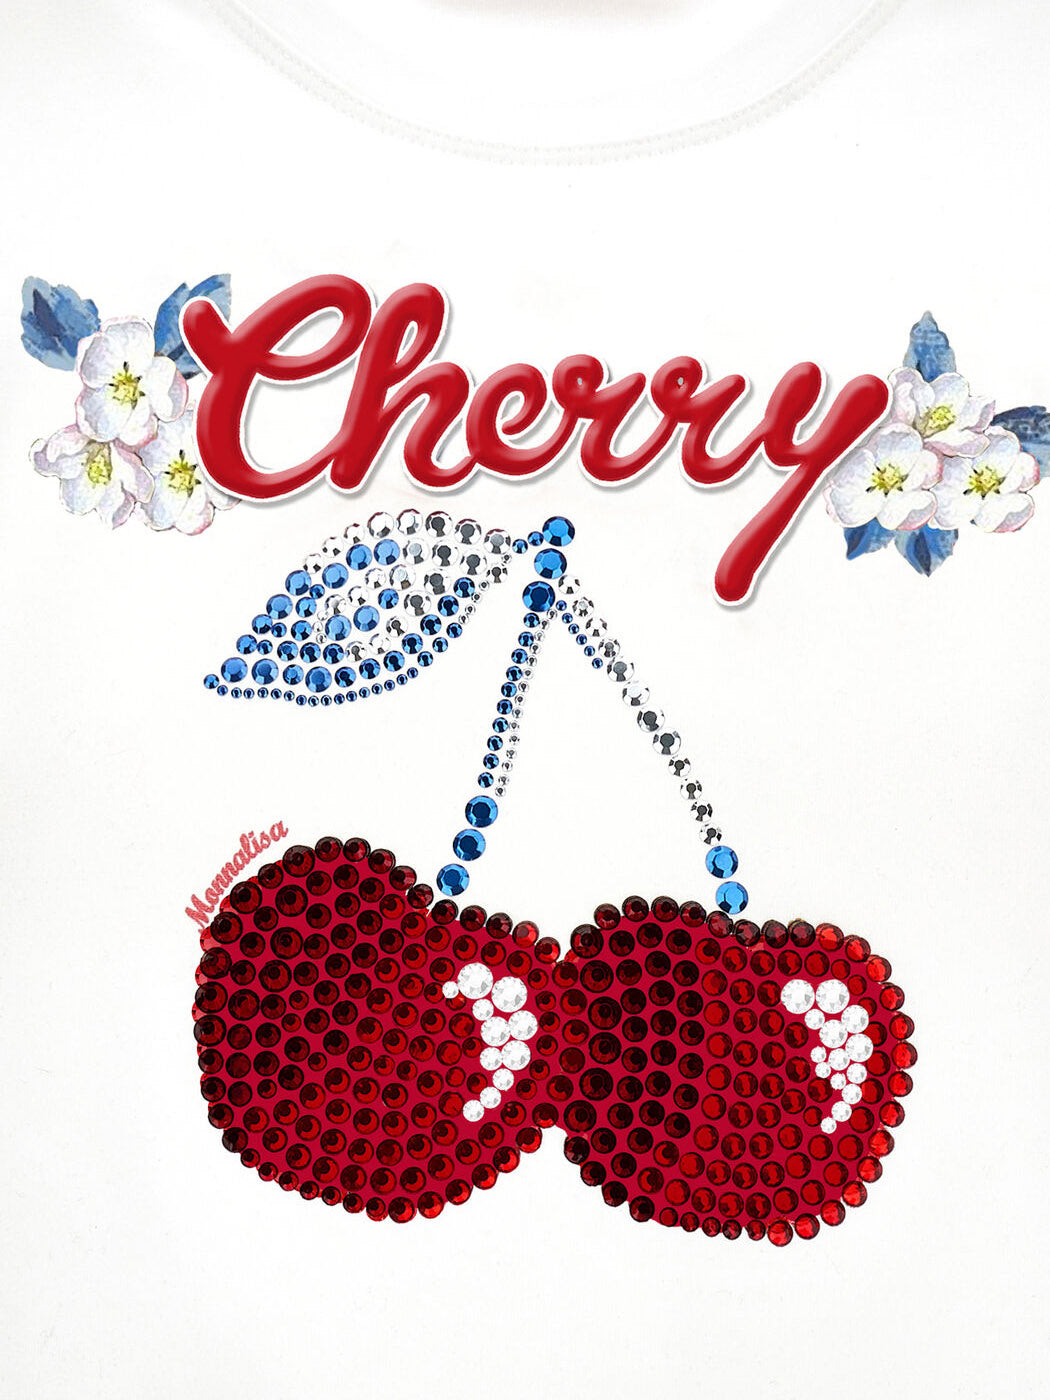 MONNALISA Cherry embroidery cotton T-shirt-19A6011012